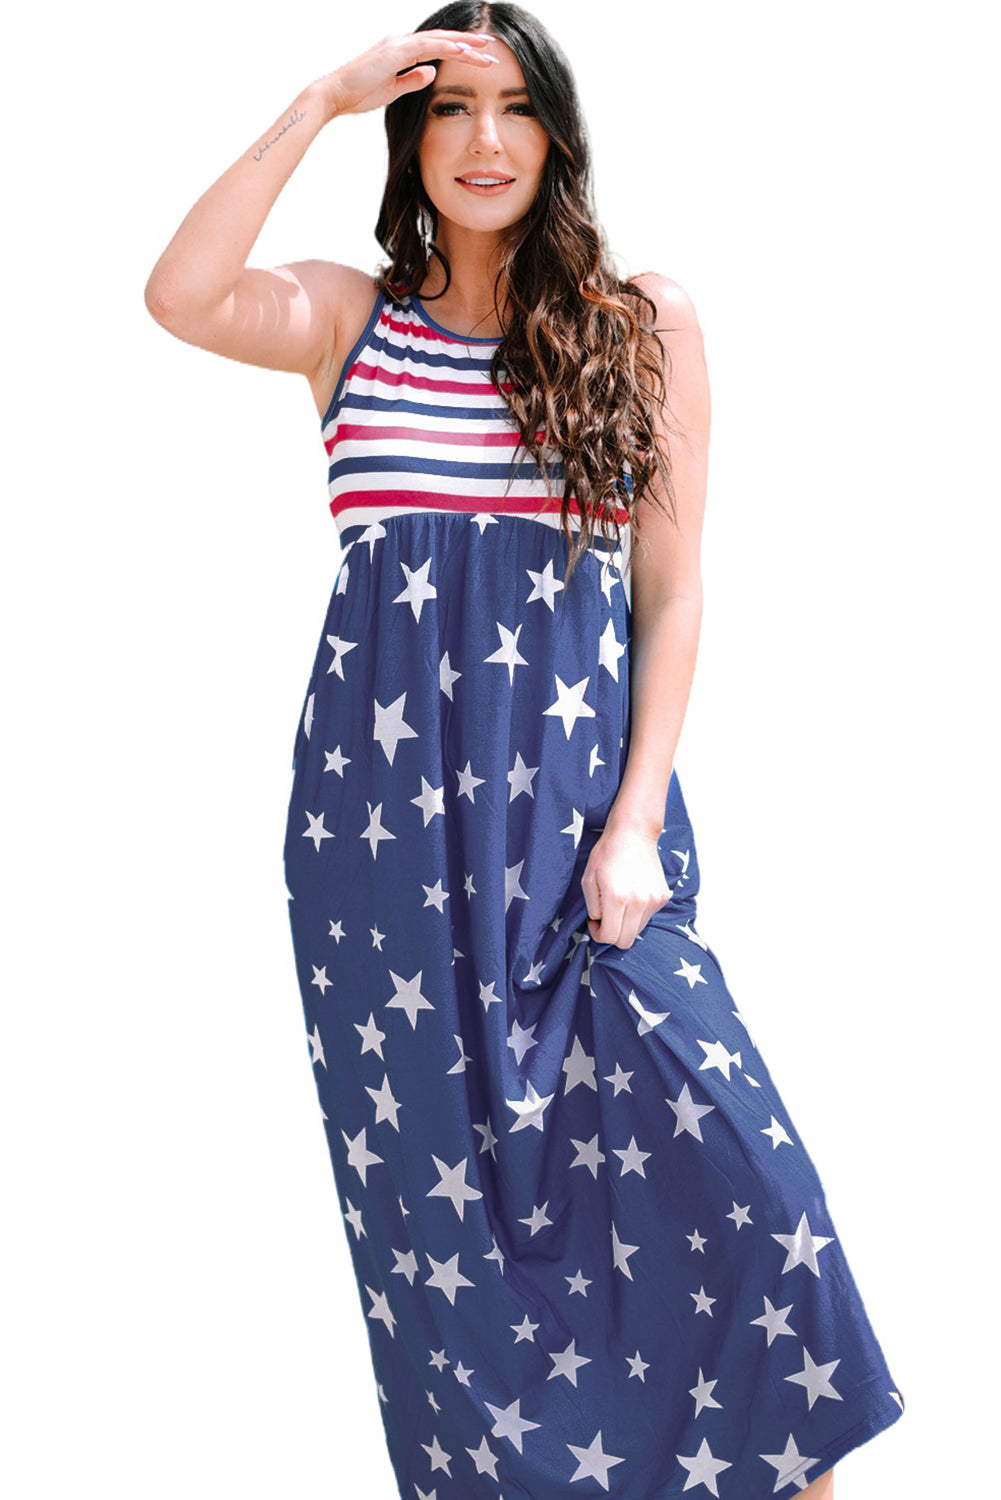 Blue Stripes And Stars Sleeveless Maxi Dress With Pockets